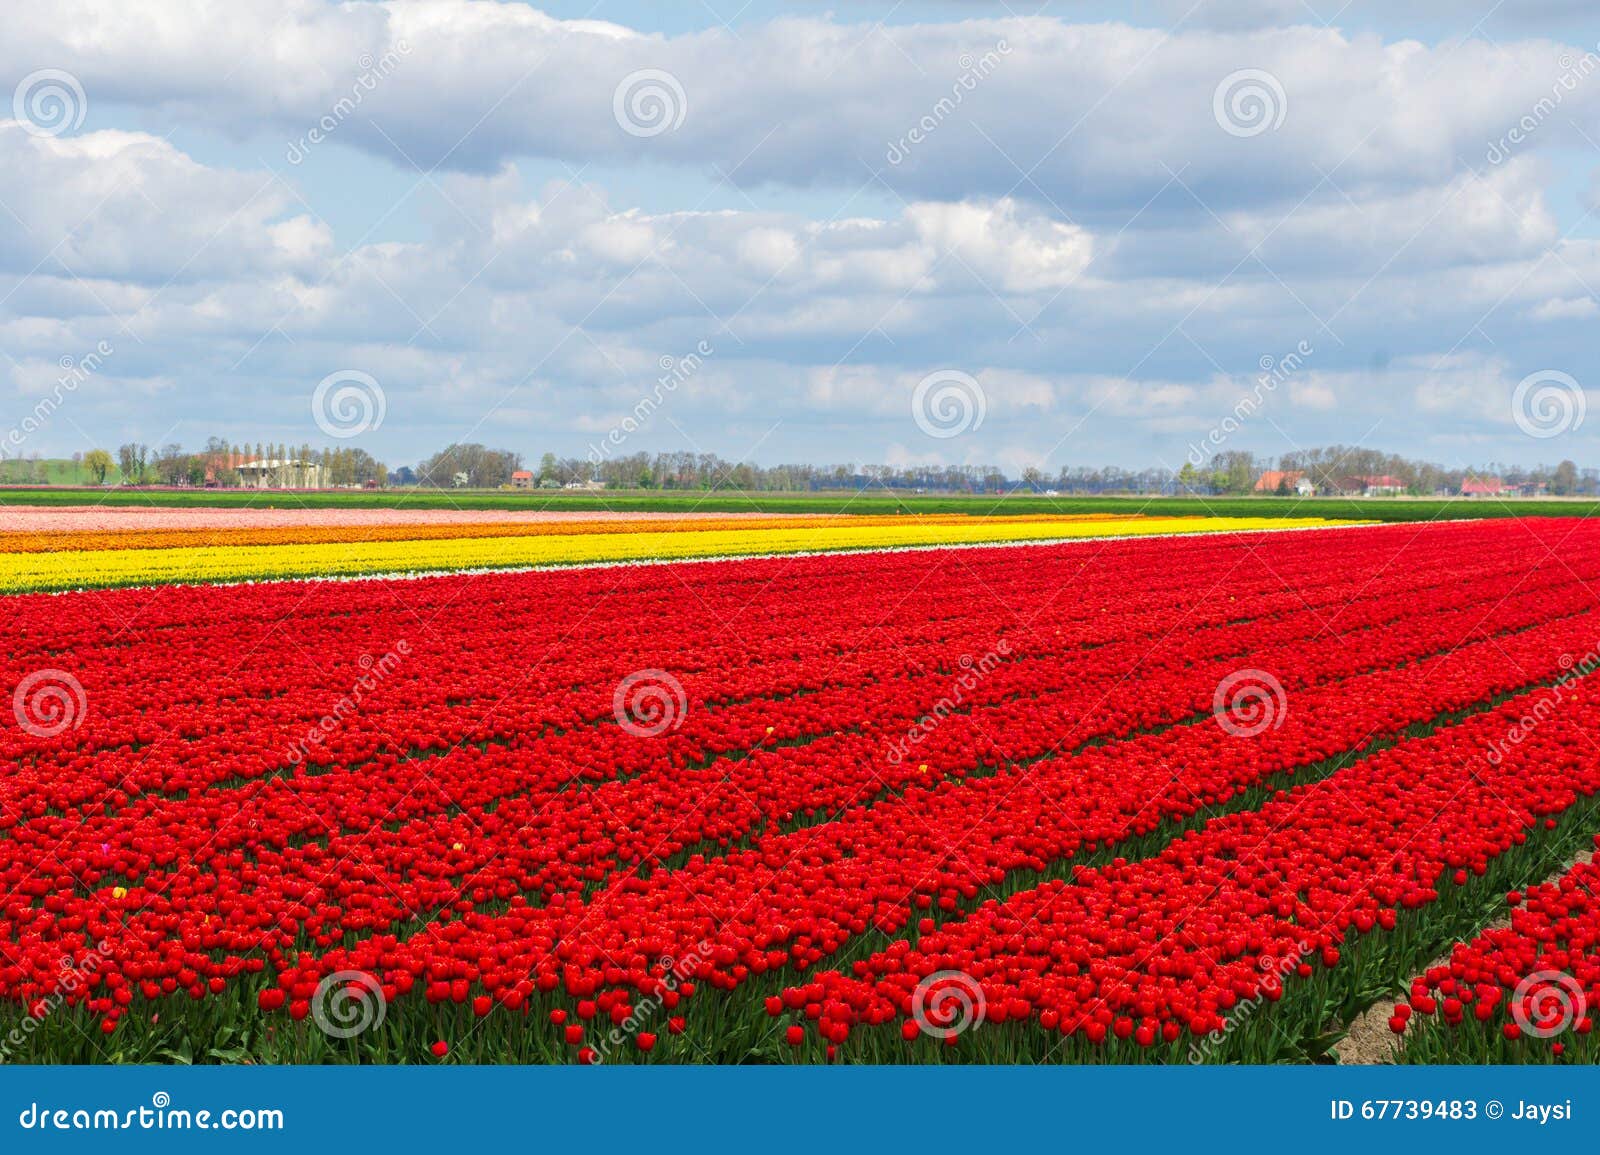 spring tulip fields in holland, flowers in netherlands